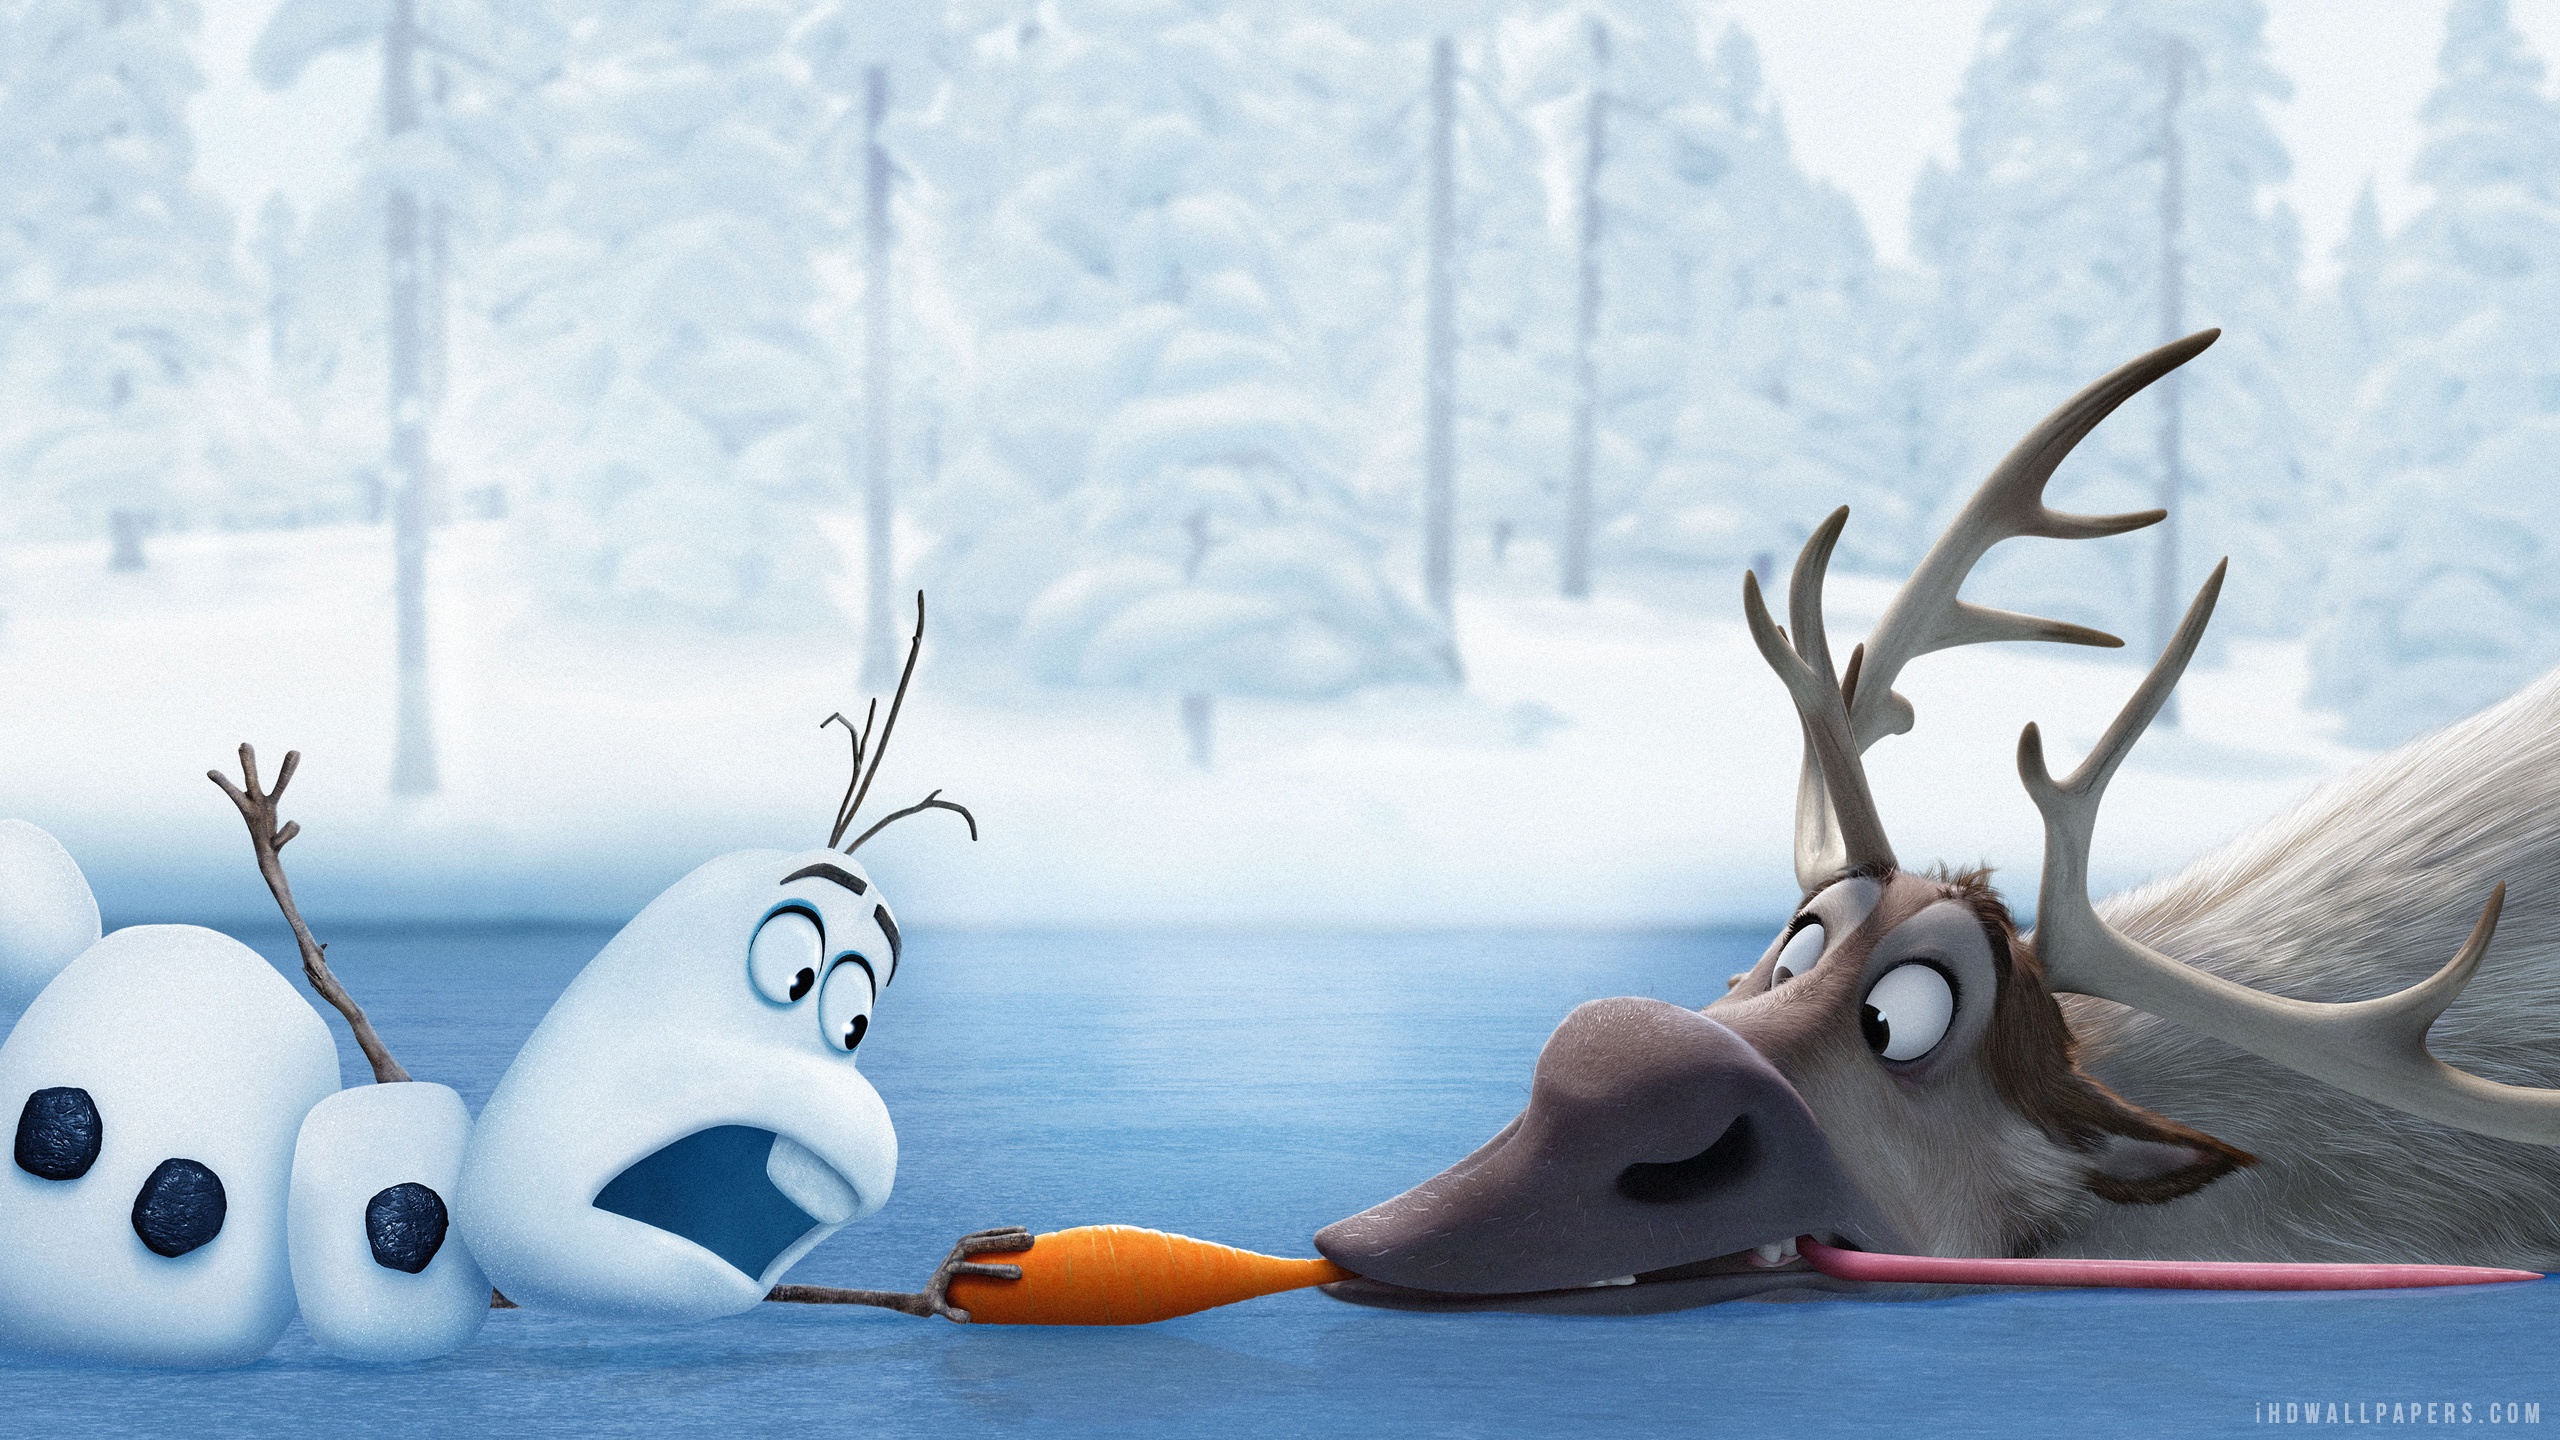 Frozen Movie Wallpaper Olaf Hd resolutions 2560x1440